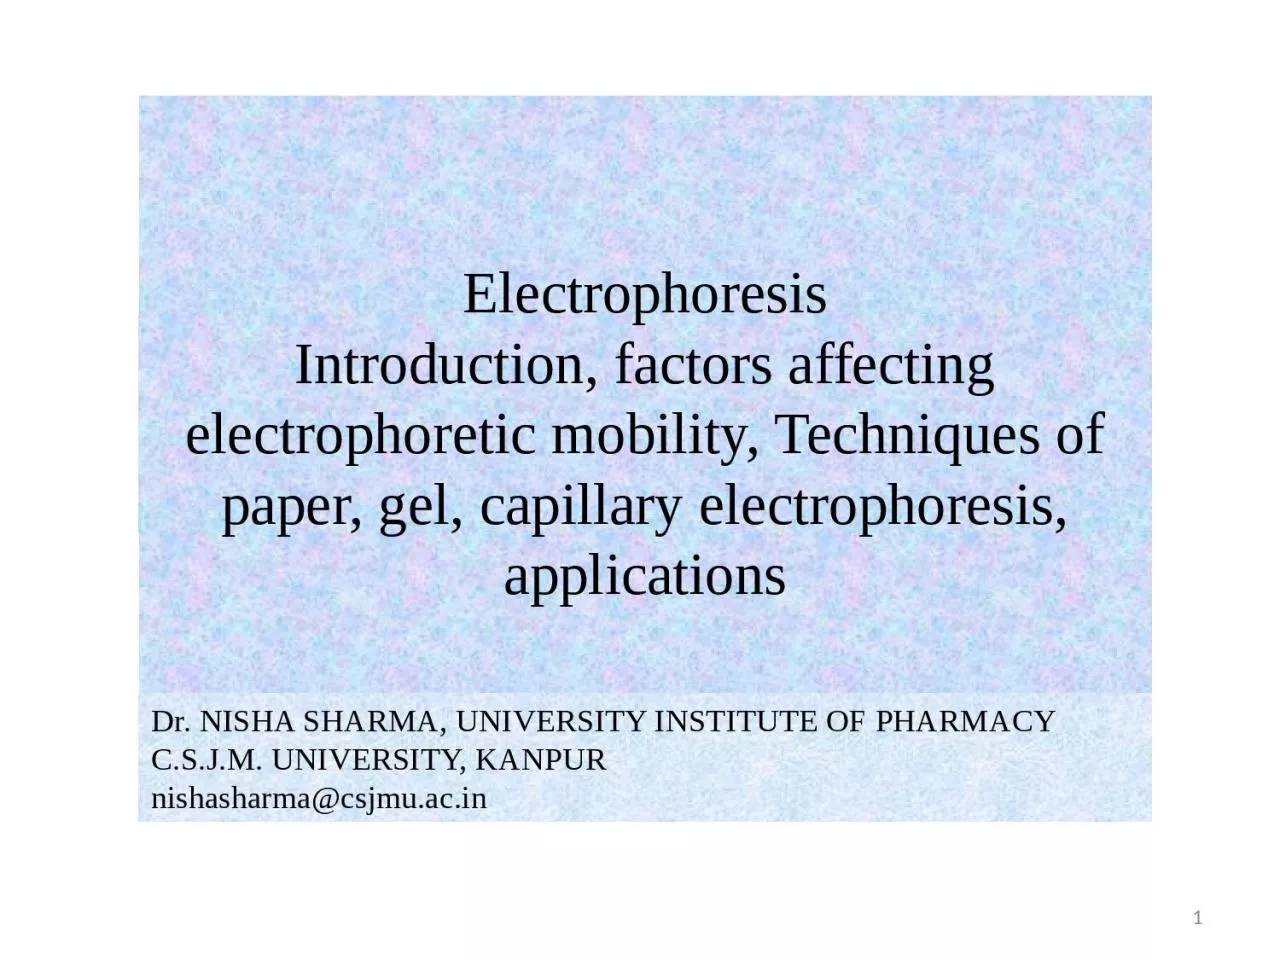 Electrophoresis Introduction, factors affecting